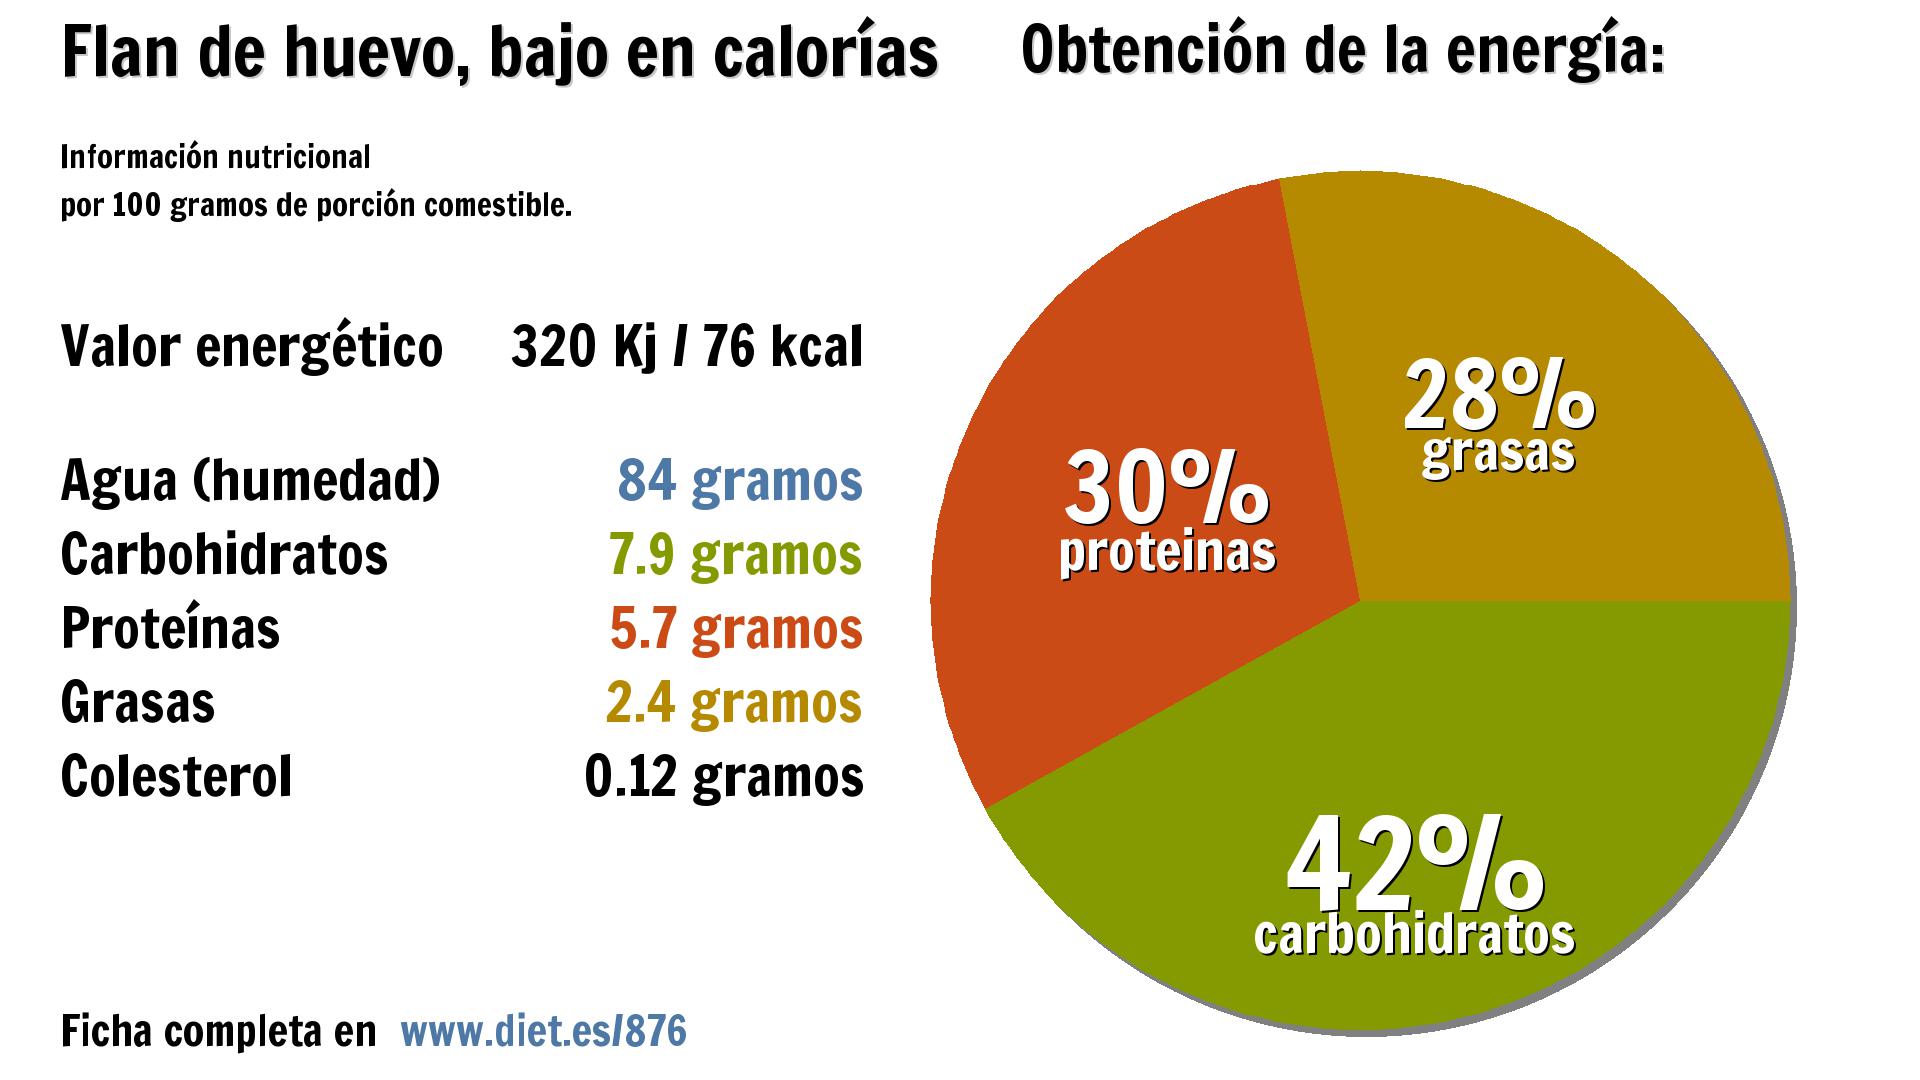 Flan de huevo, bajo en calorías: energía 320 Kj, agua 84 g., carbohidratos 8 g., proteínas 6 g. y grasas 2 g.